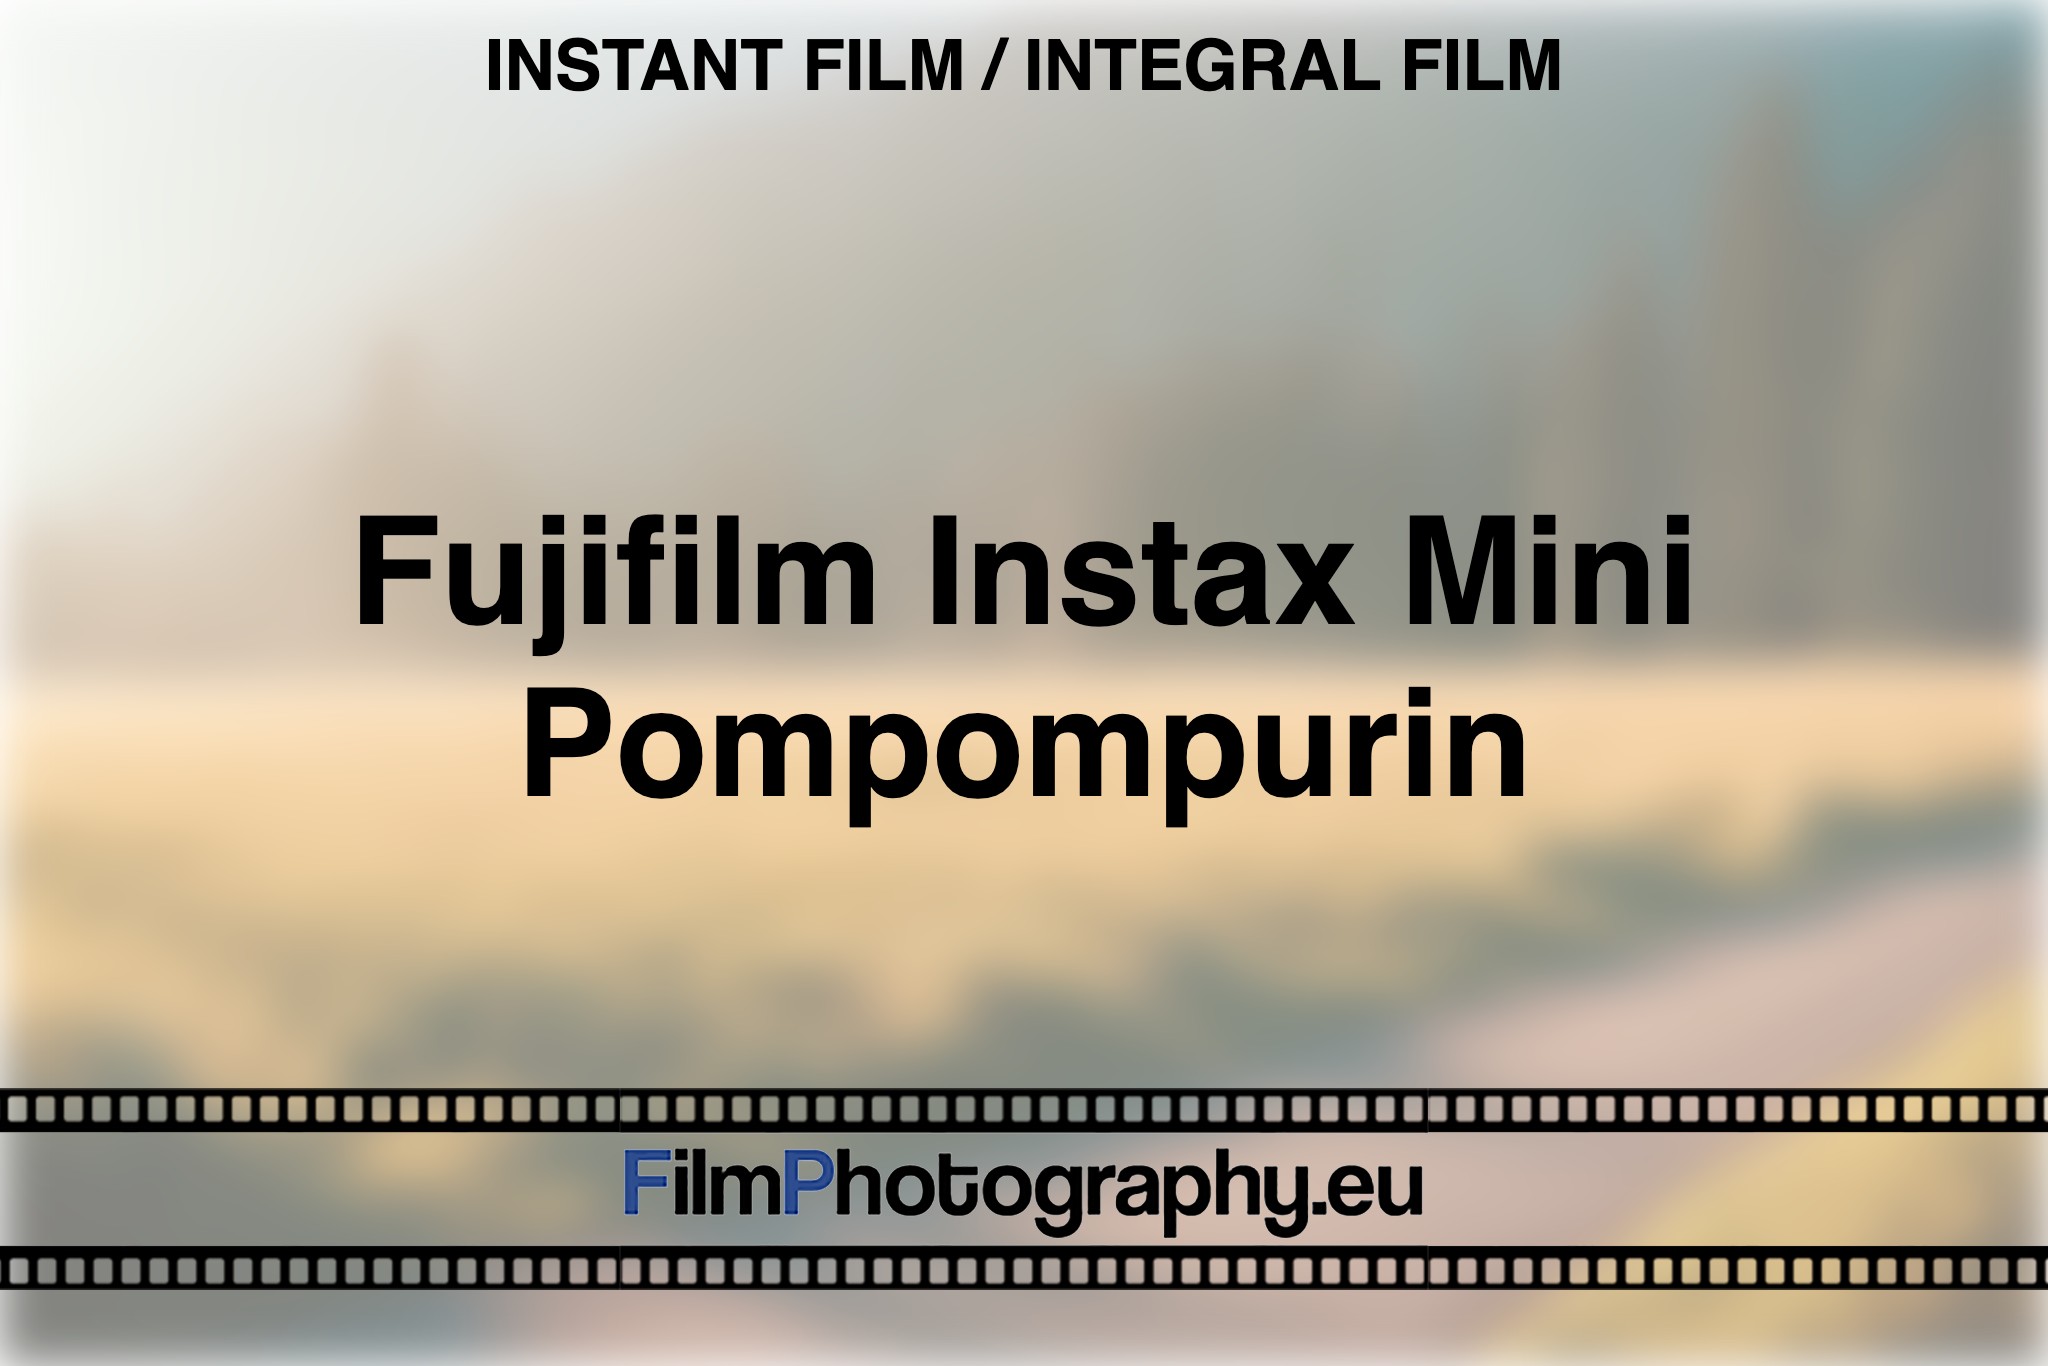 fujifilm-instax-mini-pompompurin-instant-film-integral-film-bnv